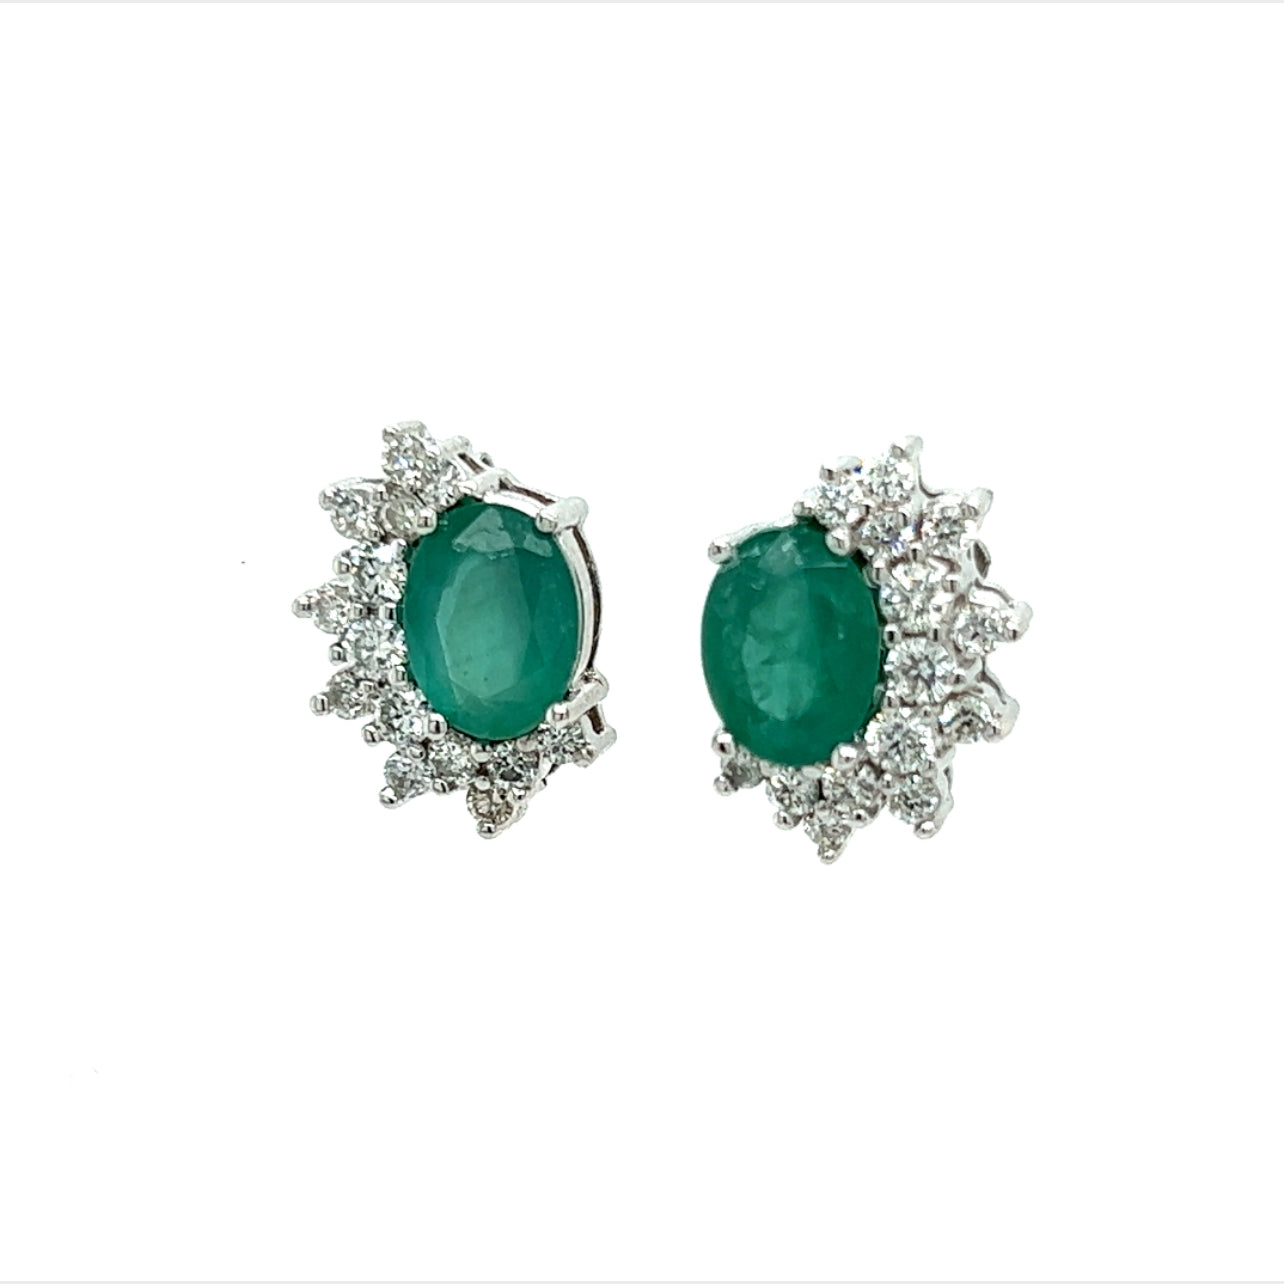 Natural Emerald Diamond Stud Earrings 14k White Gold 2.77 TCW Certified $6,950 211898